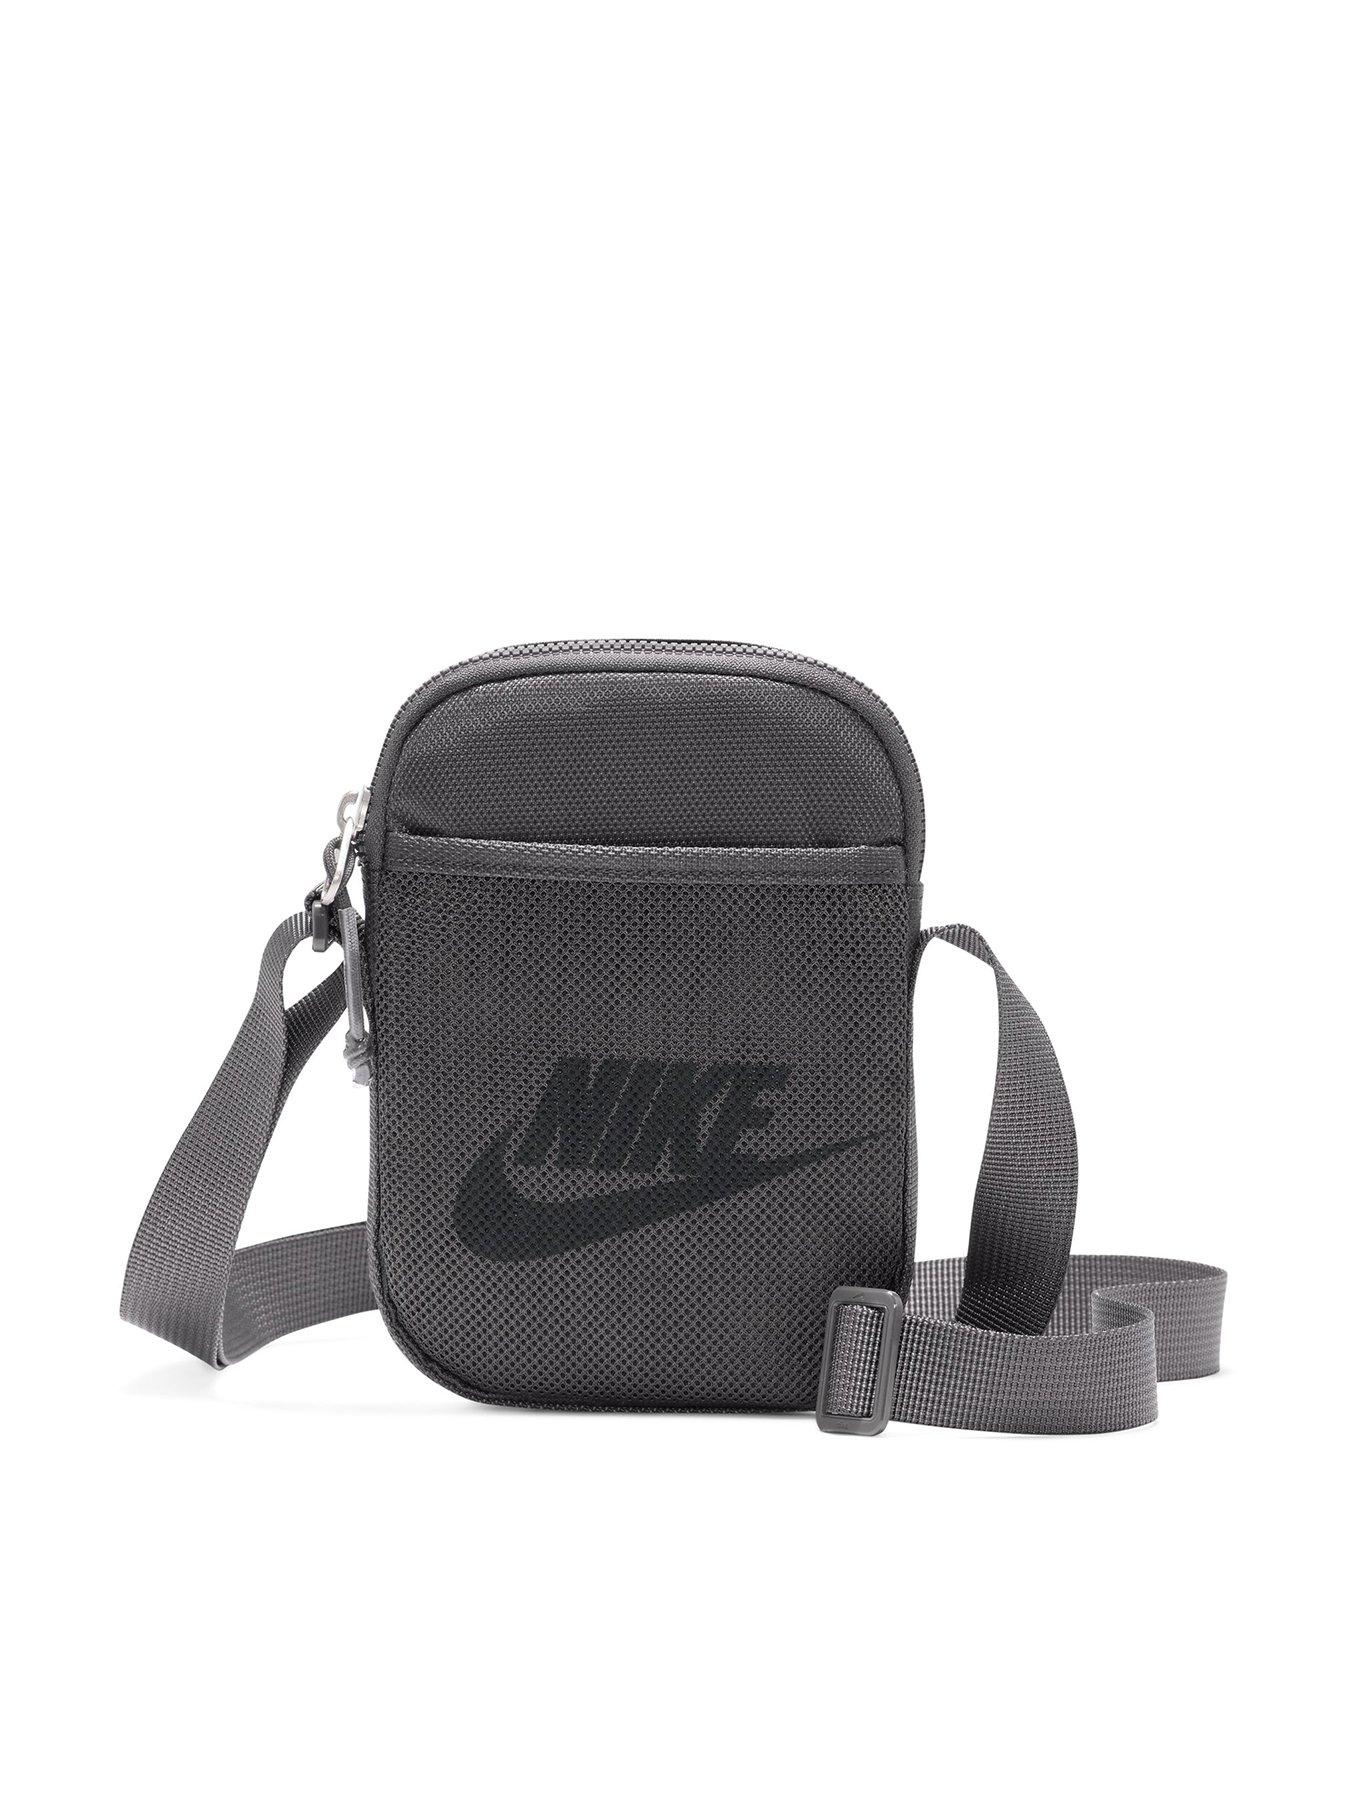 Nike Advance Small Sling Pack Black & White, END.